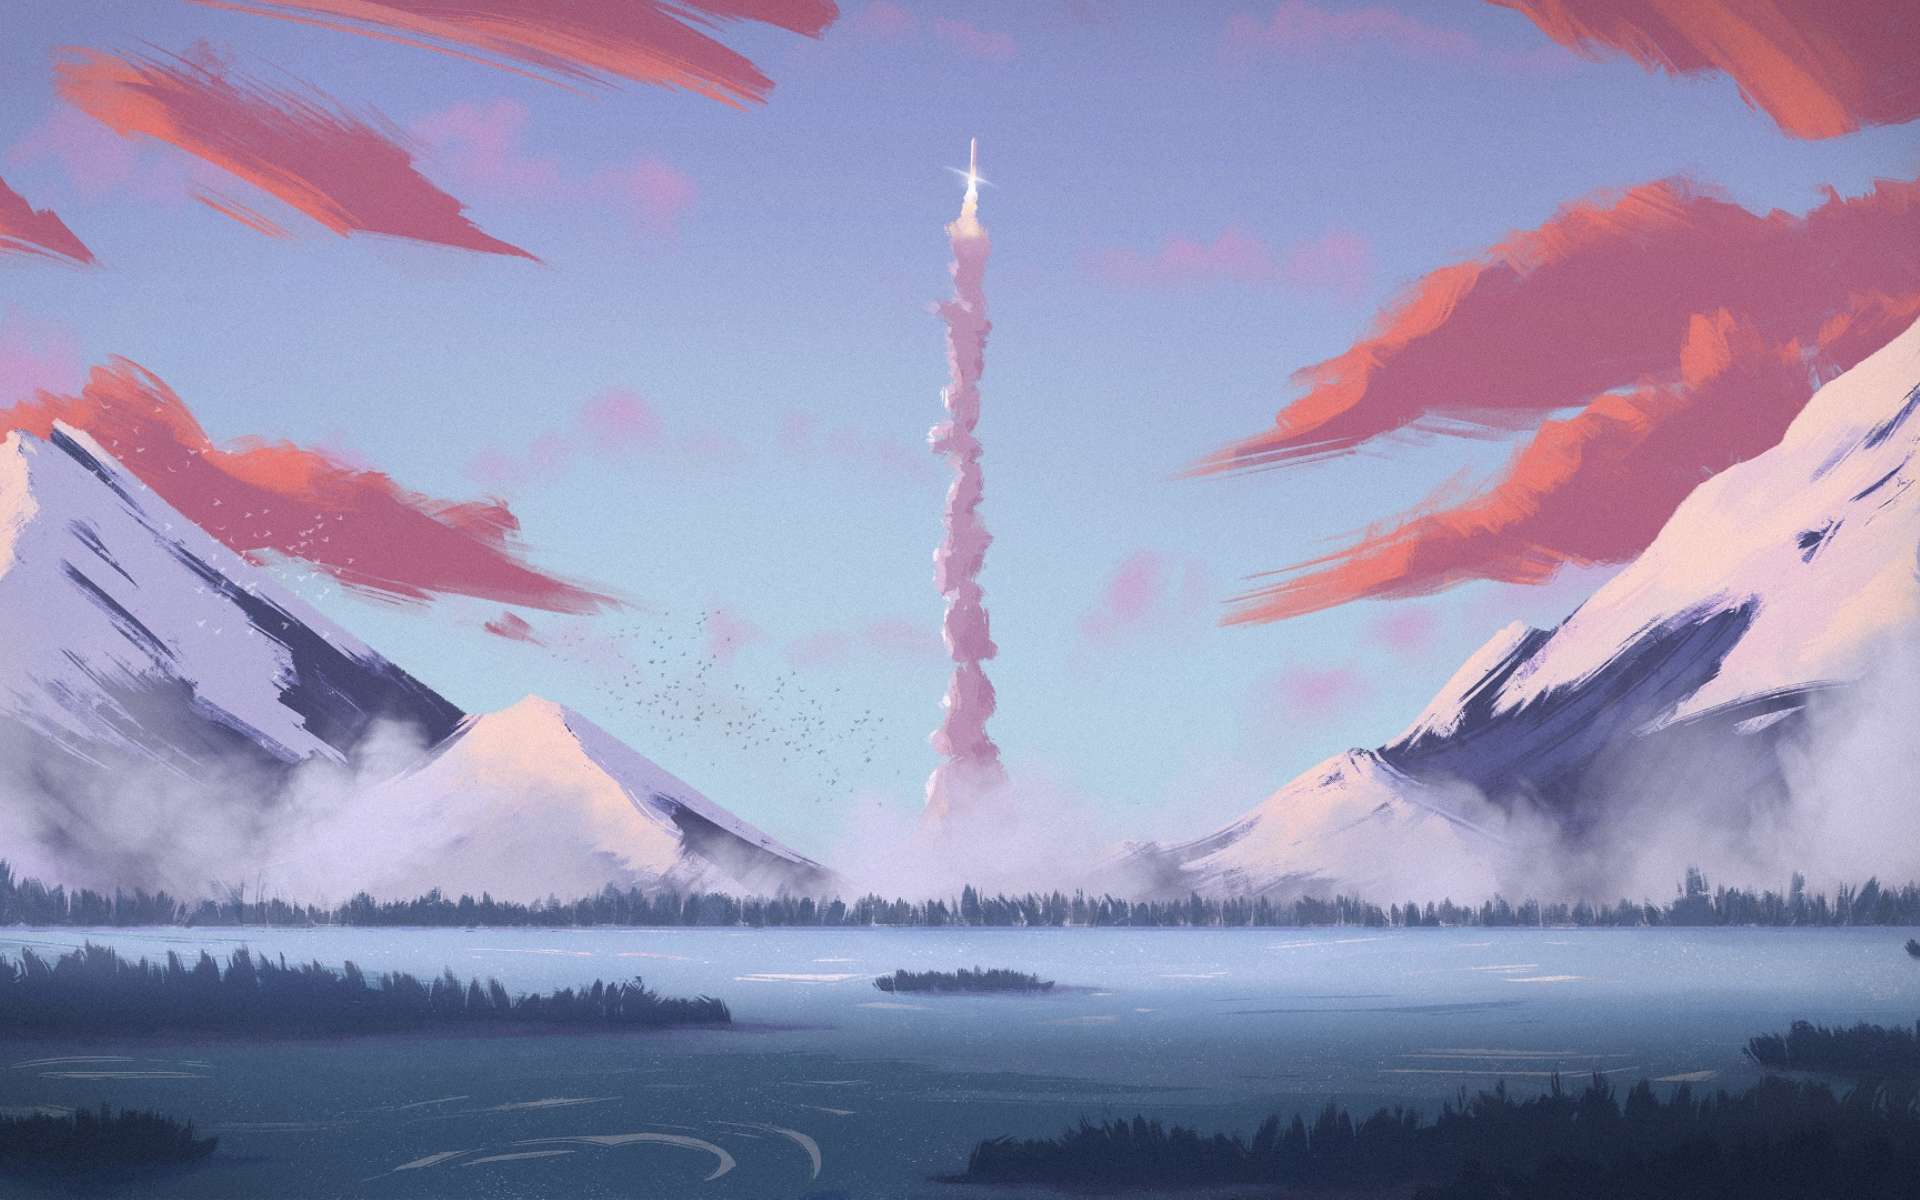 Pixel Art Pixelated Digital Art Snow Mountains Water Sky Clouds Rocket 1920x1200